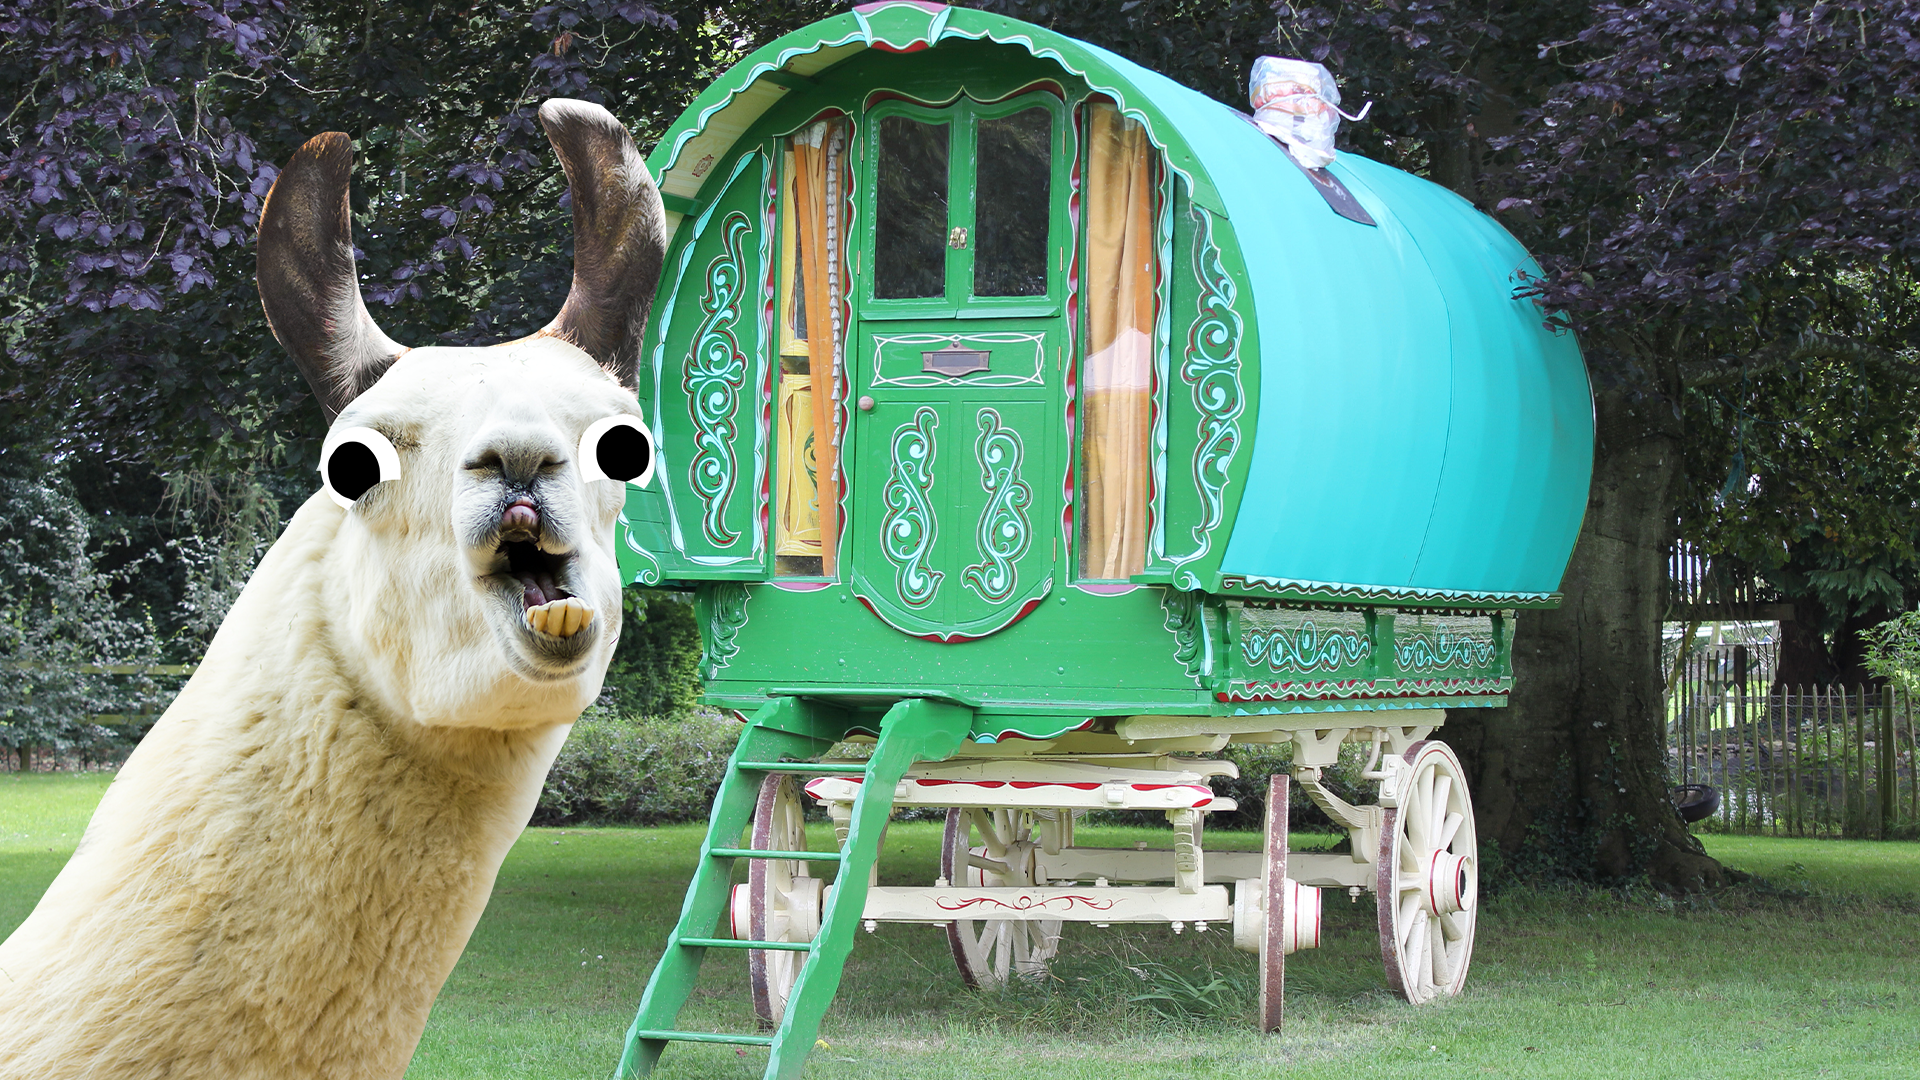 Old fashioned caravan and derpy llama 